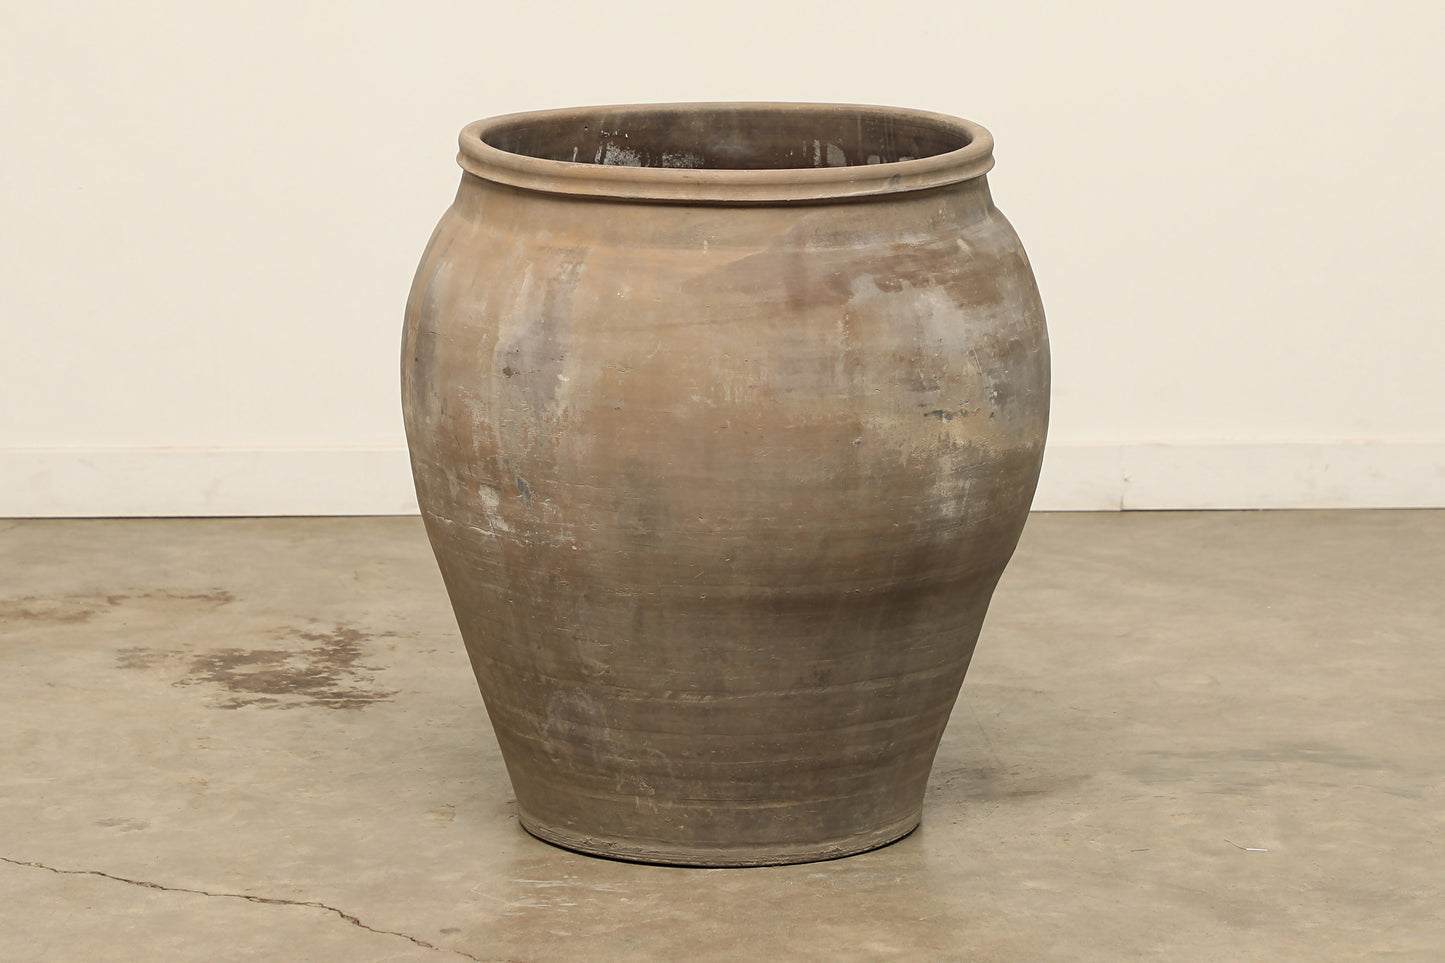 (GAT021) Vintage Shanxi Water Pot - Circa 1824 (25x25x28)